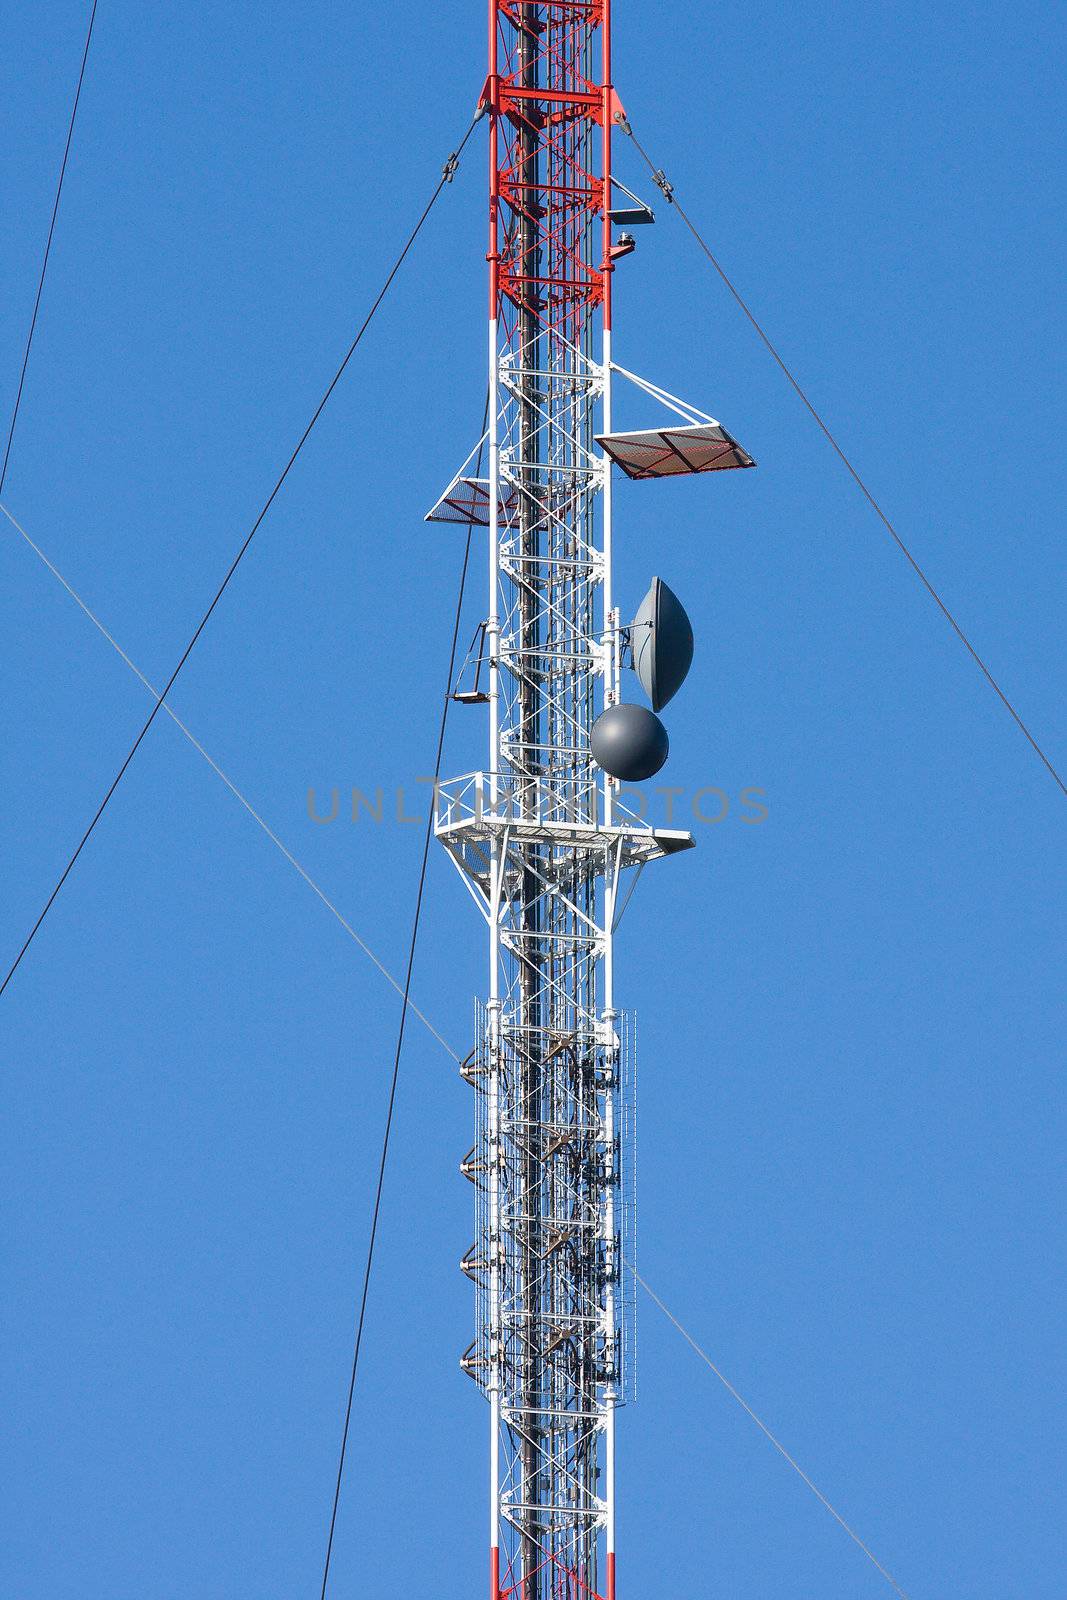 Radio Communication Tower by Coffee999